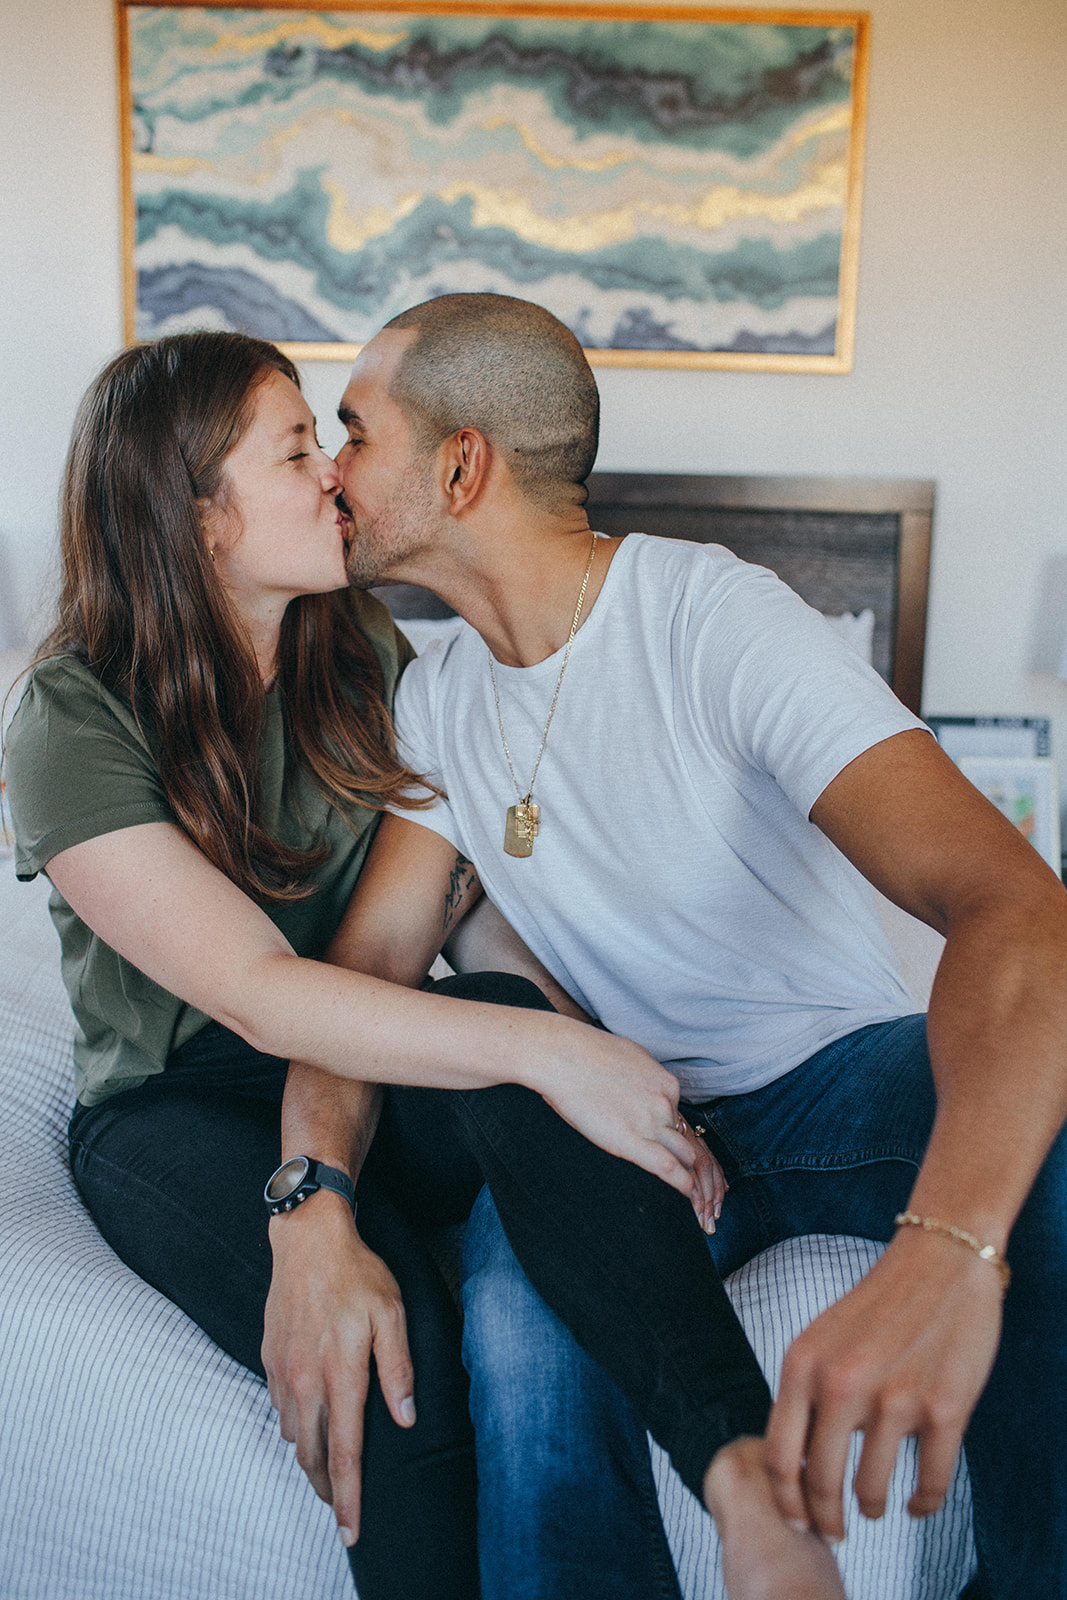 A couple sharing a sweet kiss in their downtown Cincinnati home